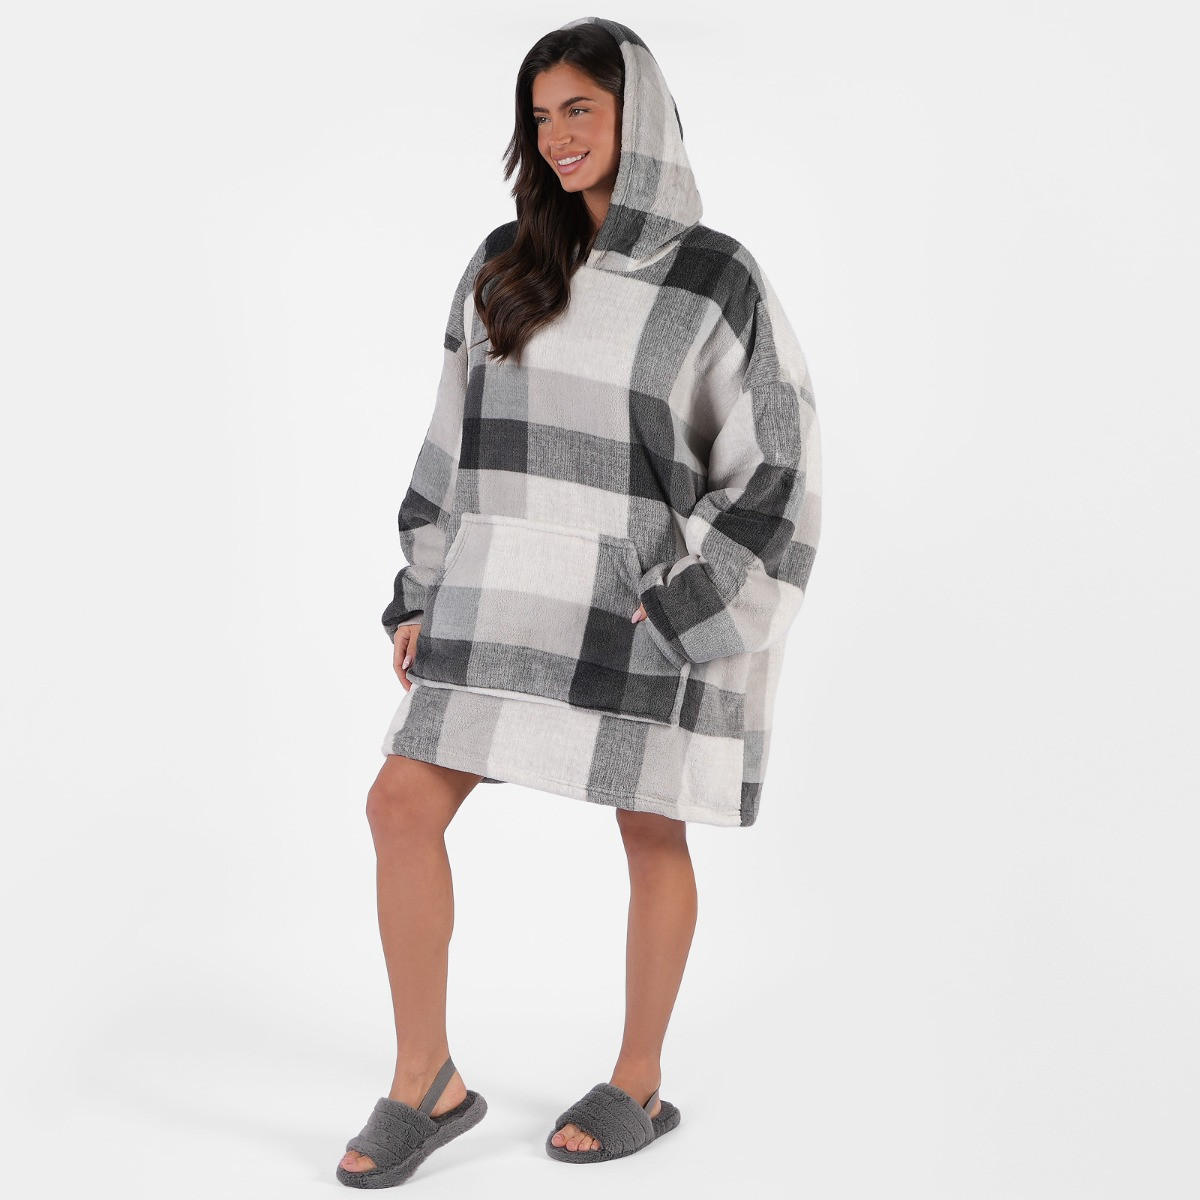 Dreamscene Tartan Winter Check Sherpa Hoodie Blanket, Adults - Grey>